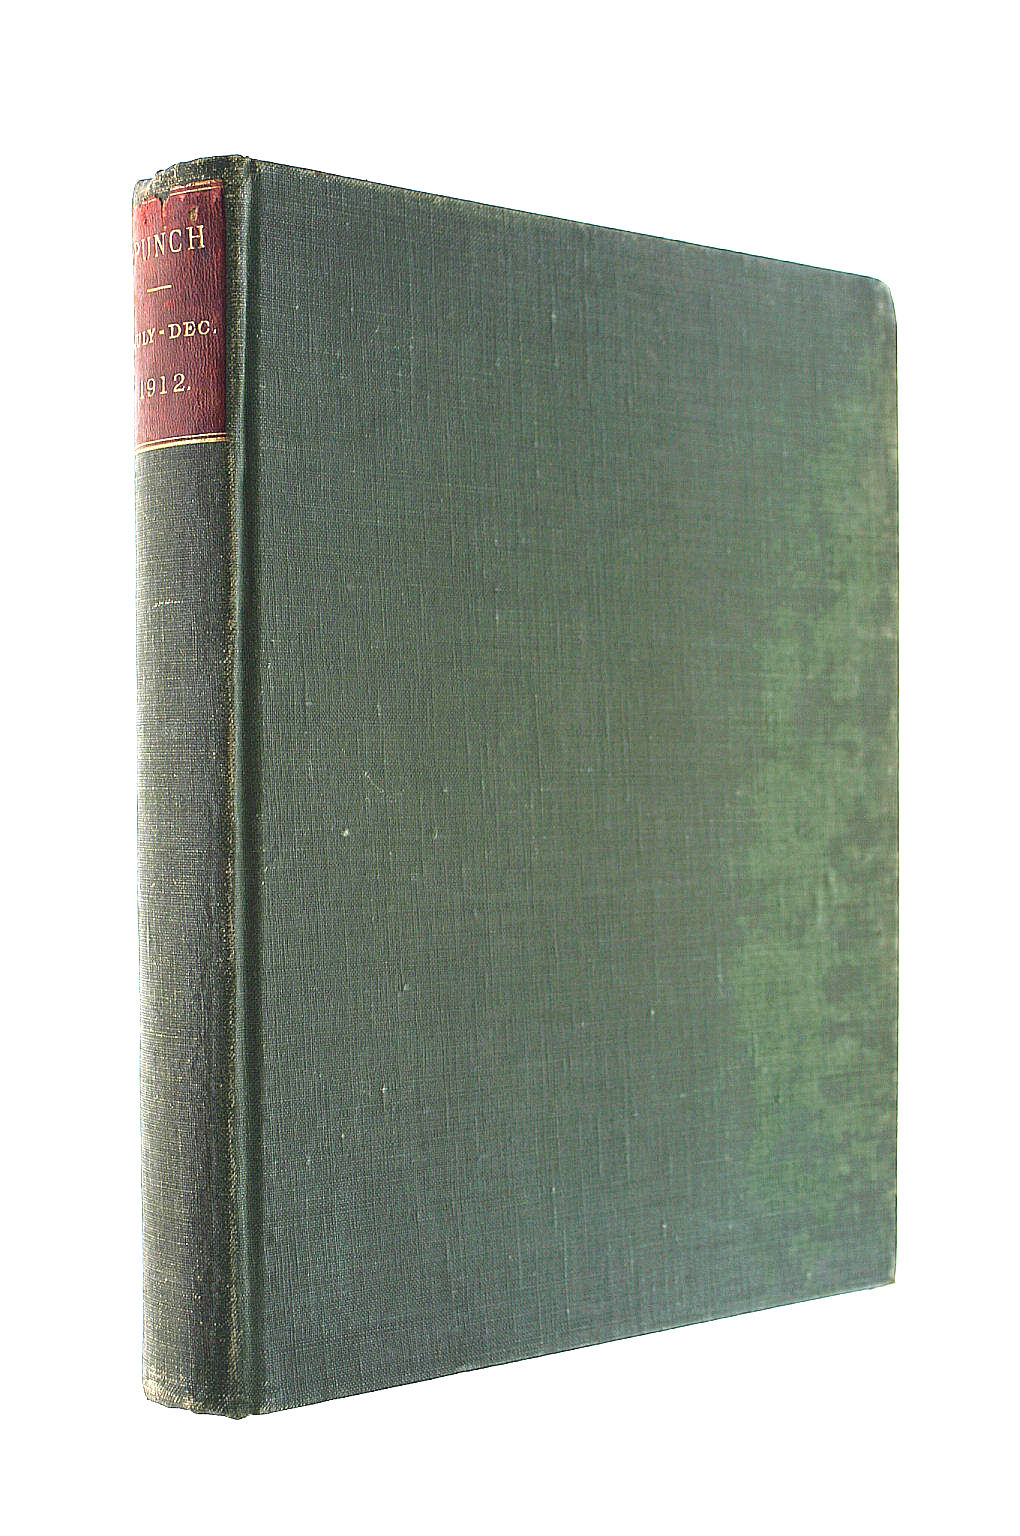 ANON - Punch Volume CXLIII (143). July-December 1912